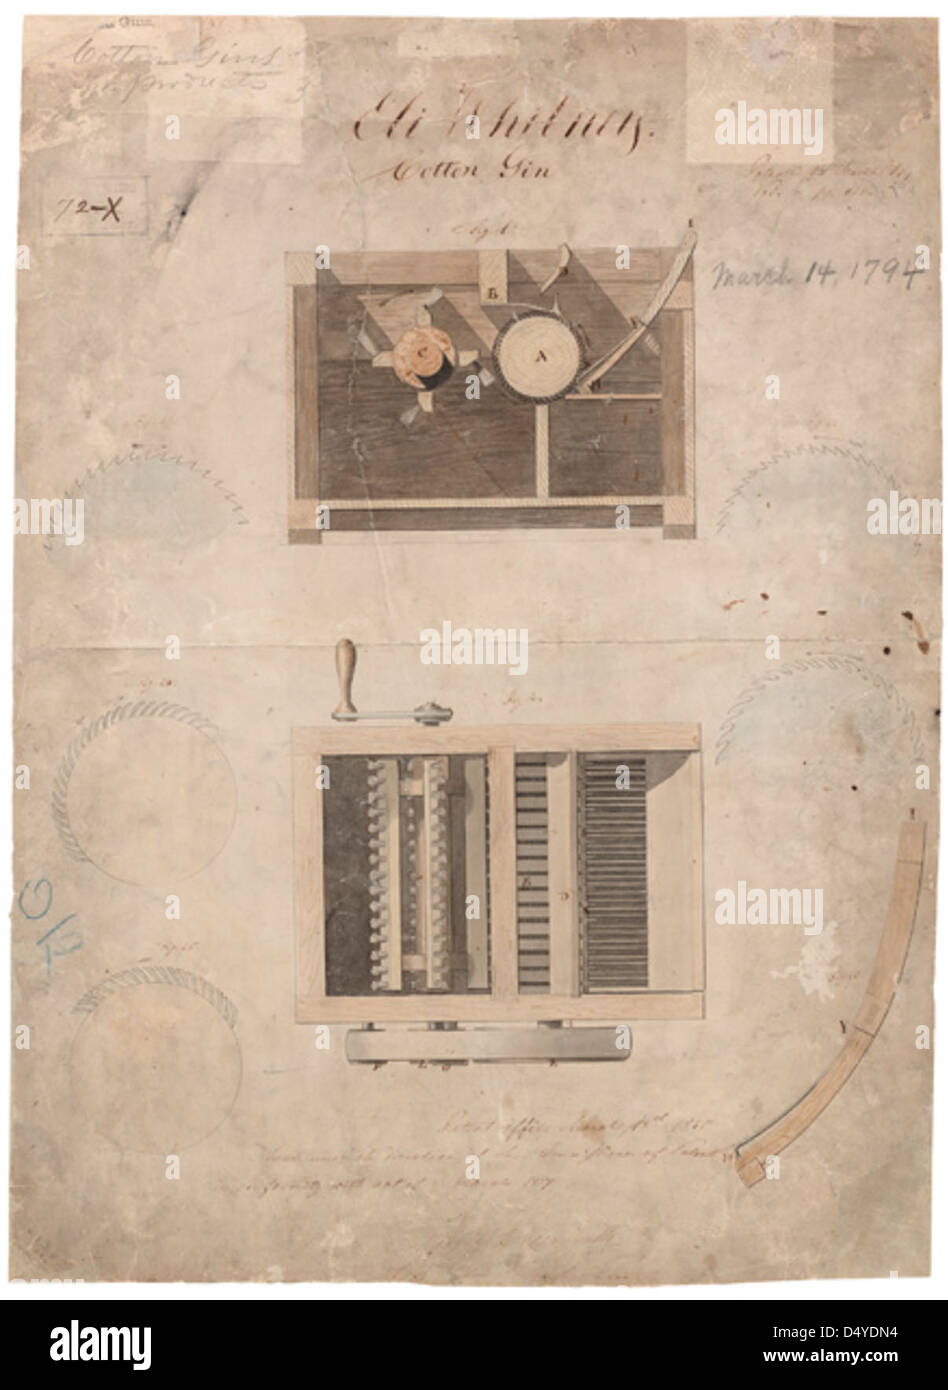 Eli Whitney's Cotton Gin Patent Drawing, 03/14/1794 Stock Photo